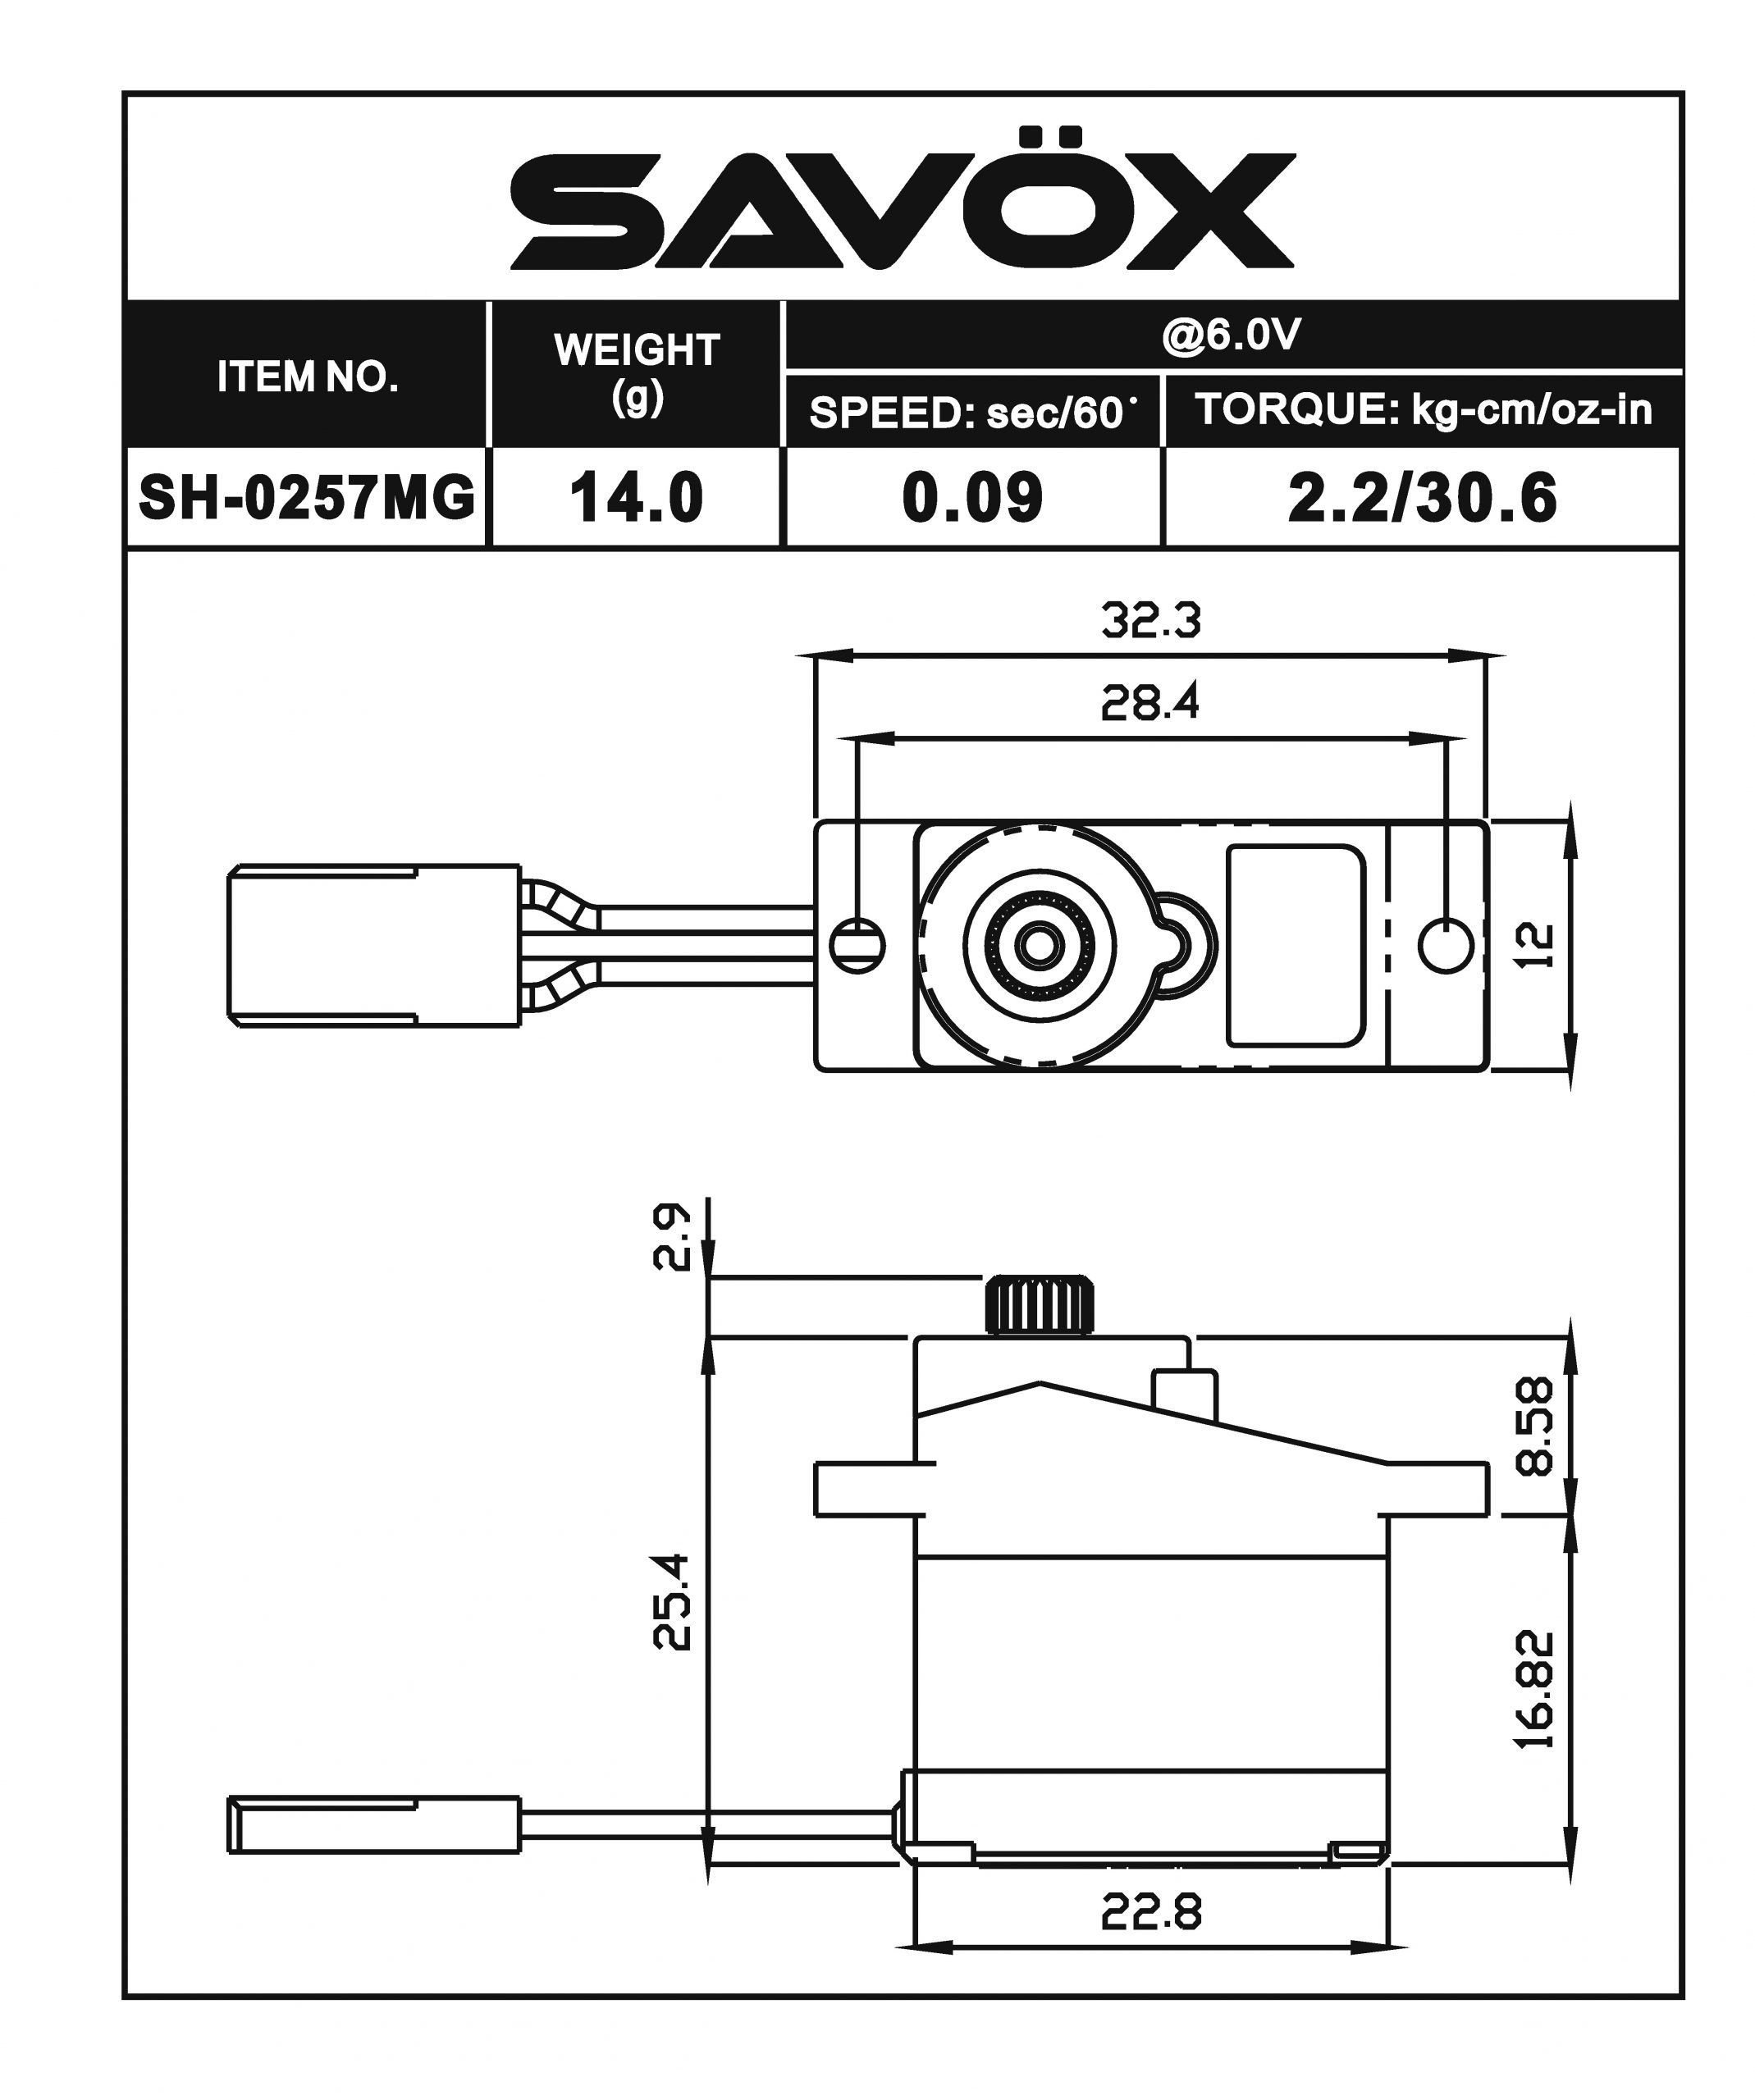 Savox SH-0257MG Digital Metal Gear "High Speed" Micro SAV-SH-0257MG 